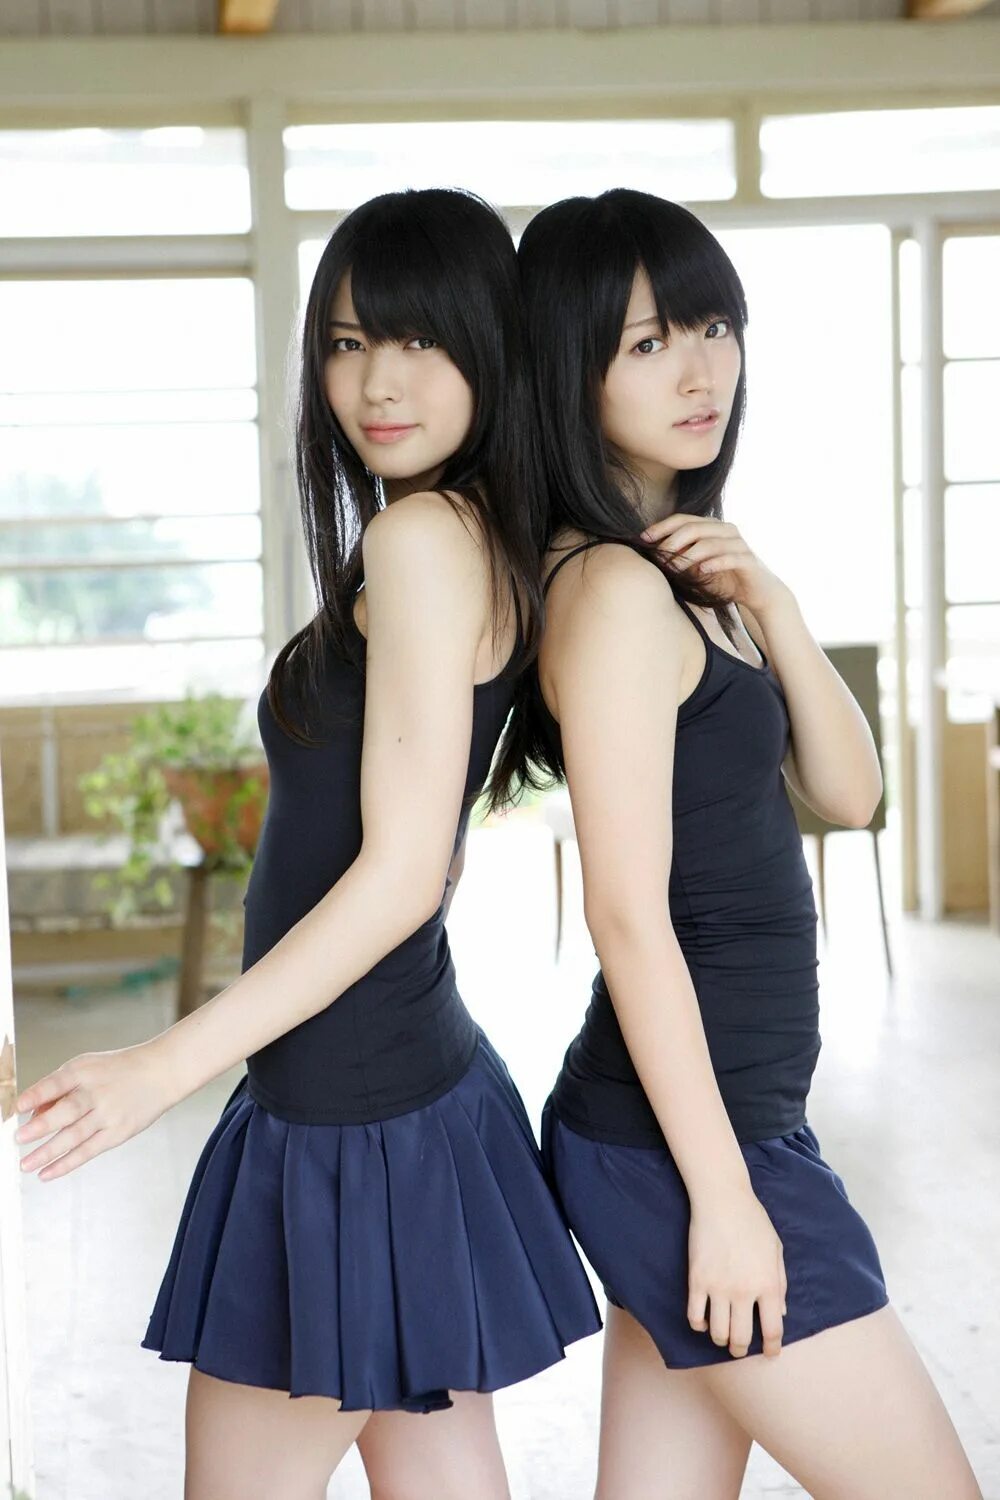 Airi Suzuki and Maimi Yajima. Азиатские близняшки. Азиатские Близнецы. Японские сладкие девочки. Japanese girl lesbian